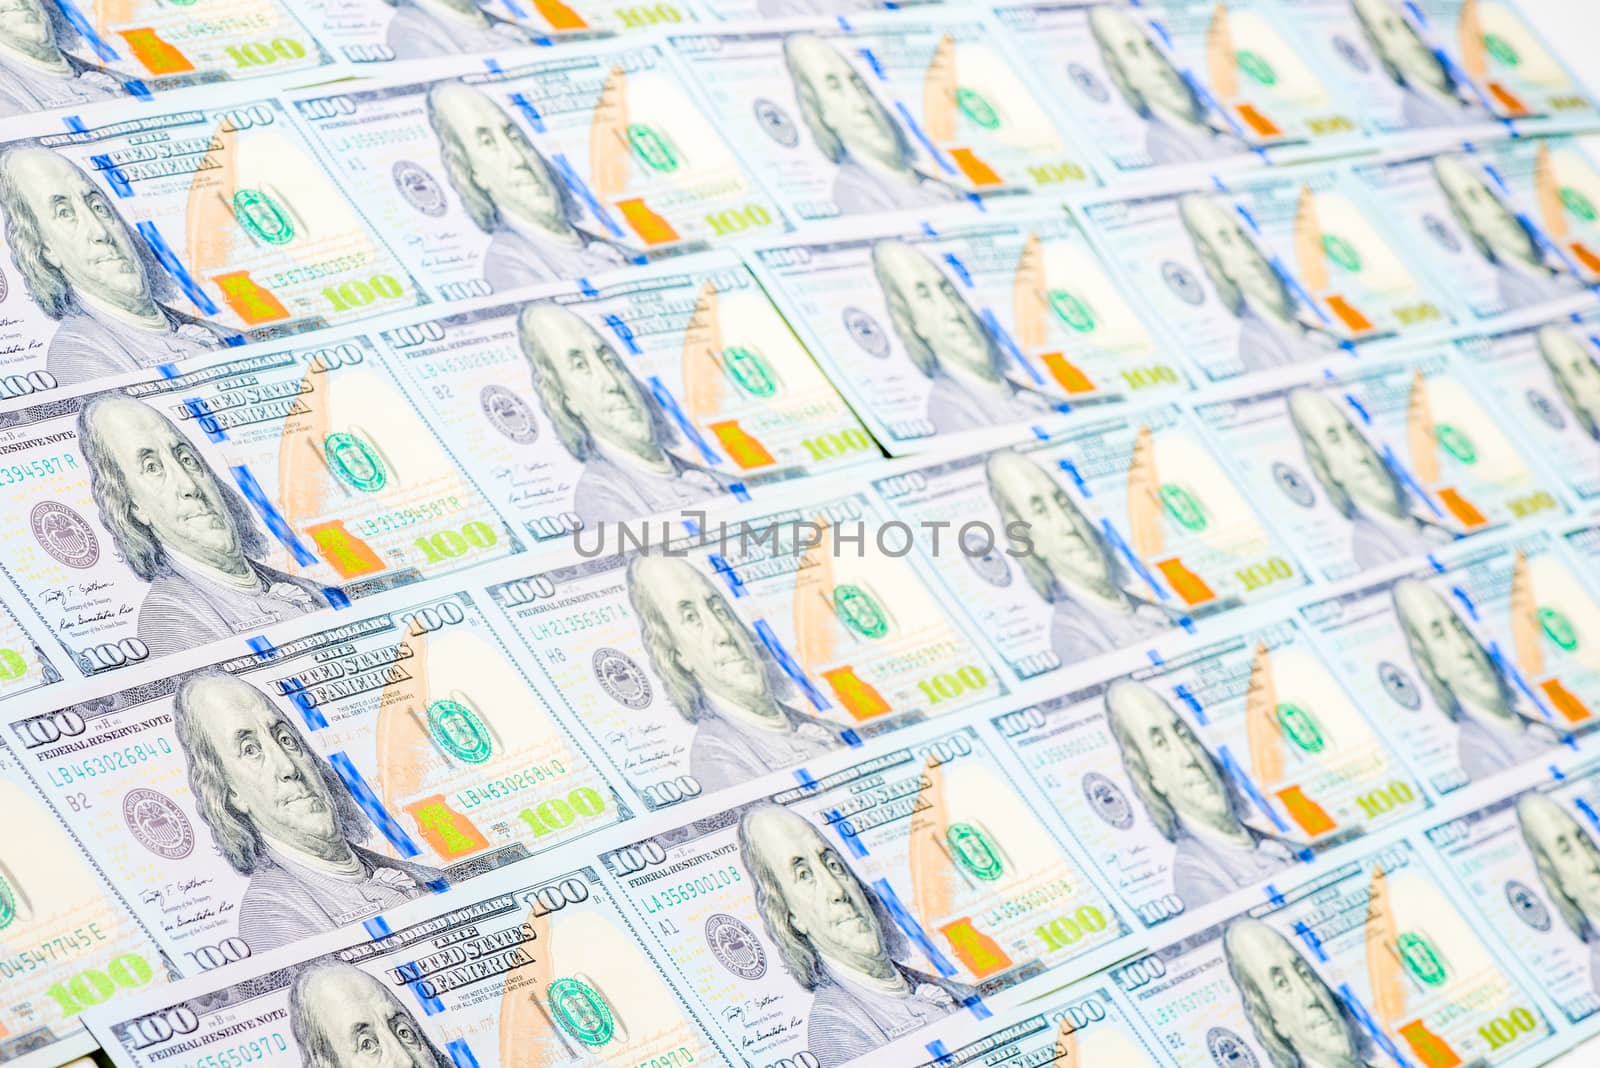 macro shot of 100 dollar bills in a row background